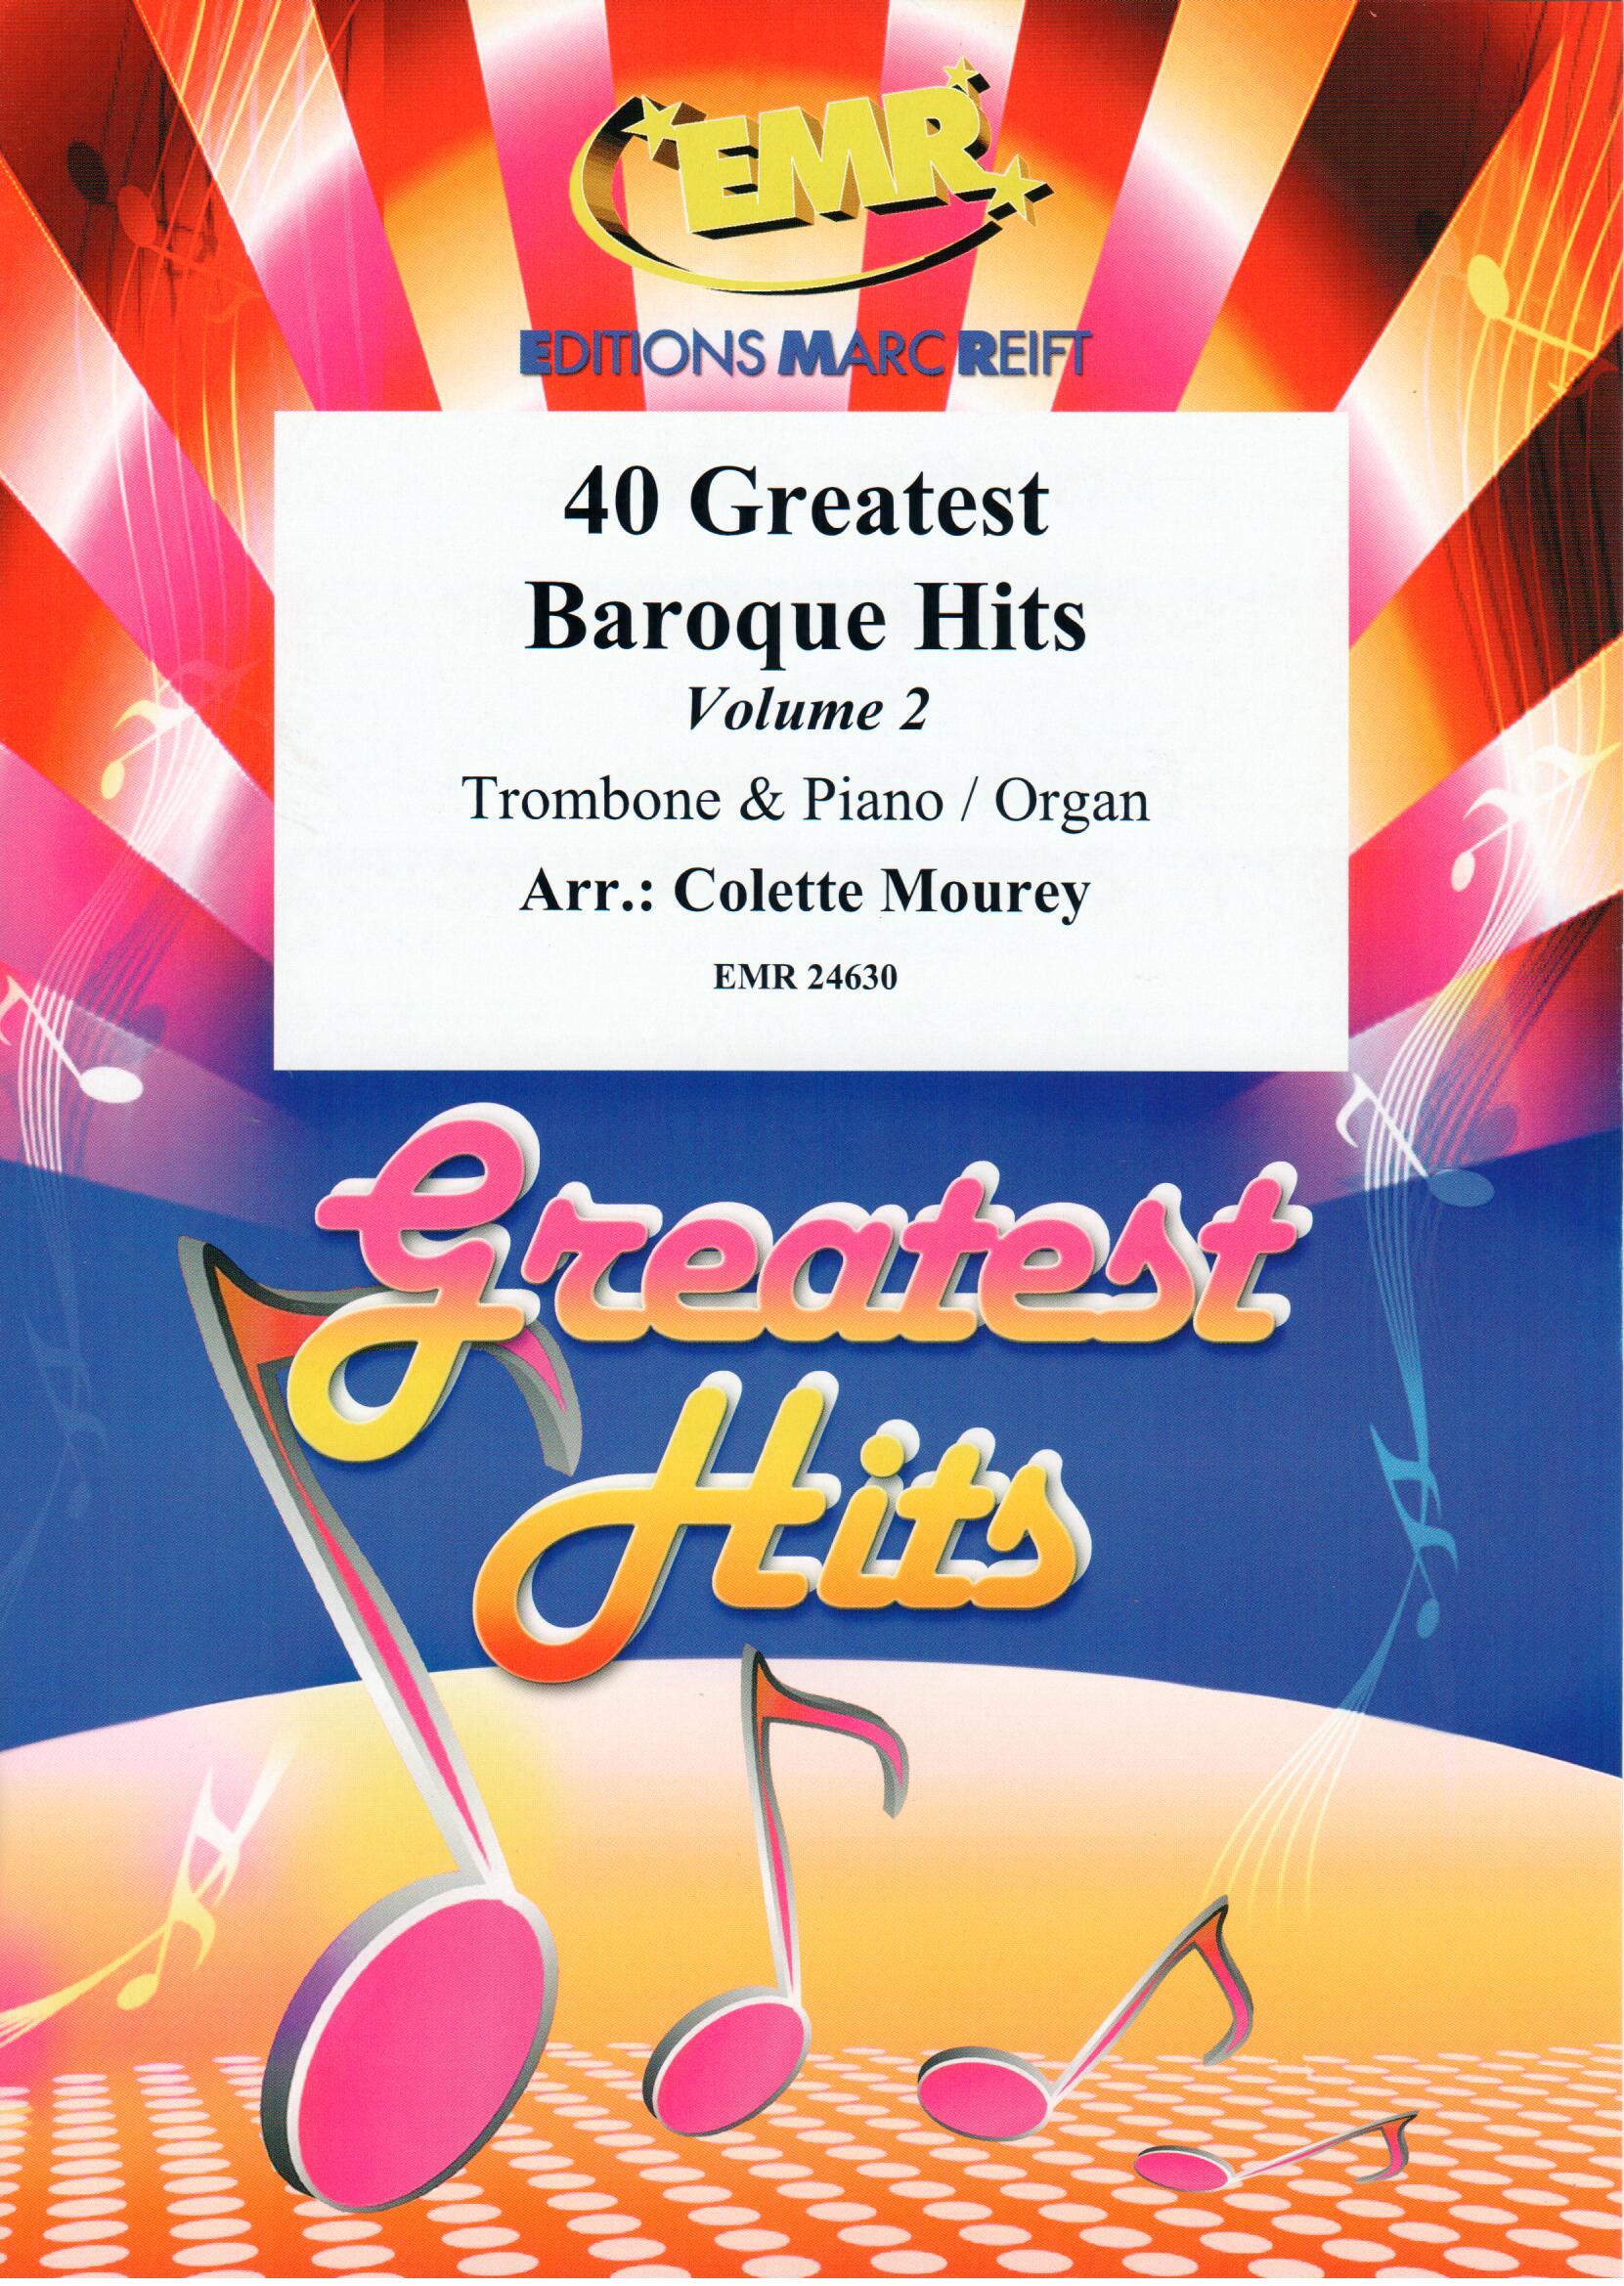 40 GREATEST BAROQUE HITS VOLUME 2, SOLOS - Trombone